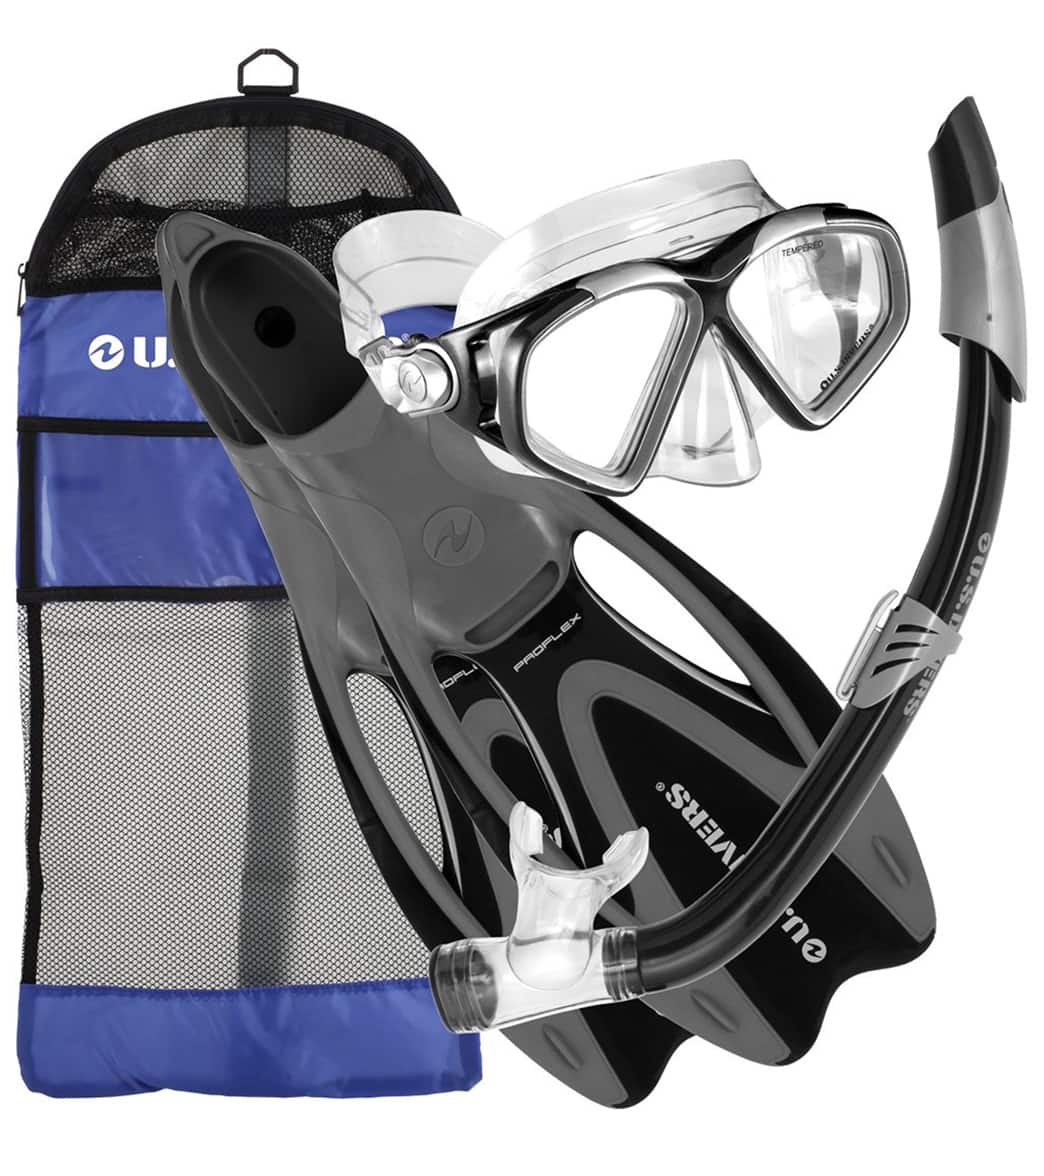 U.s. Divers Cozumel Mask/ Island Dry Snorkel/ Hingeflex Ii Fins/Gear Bag Set - Gunmetal/Black L/Xl 9-13 - Swimoutlet.com